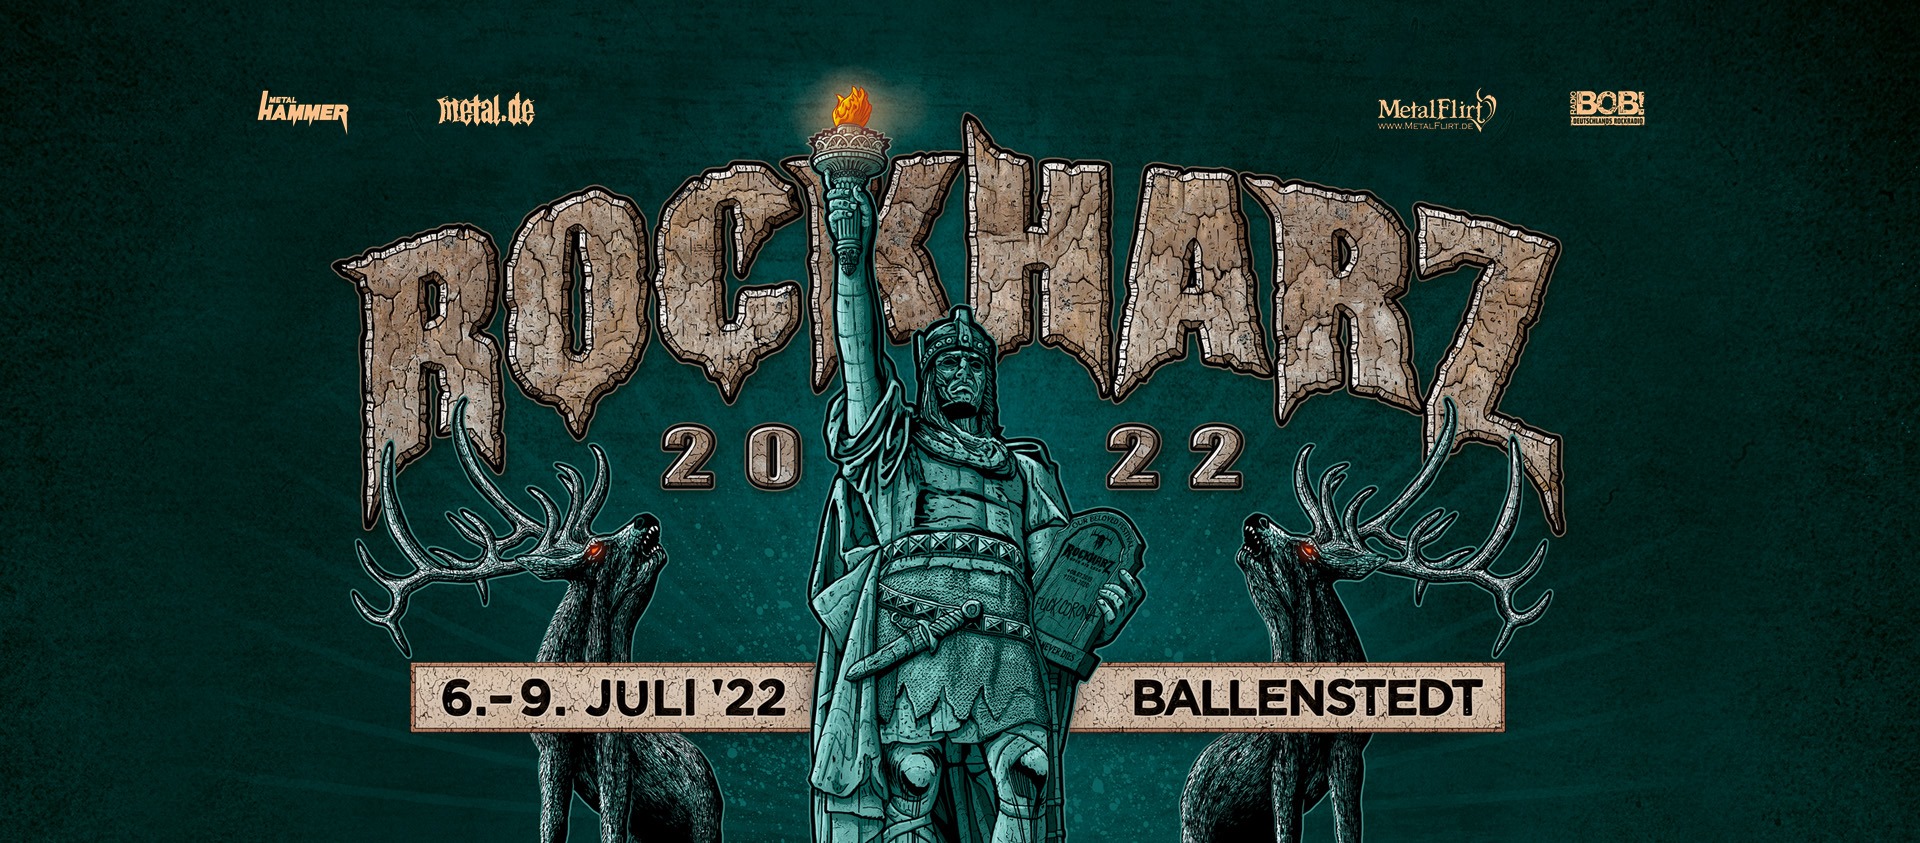 Vorbericht: ROCKHARZ Festival 2022